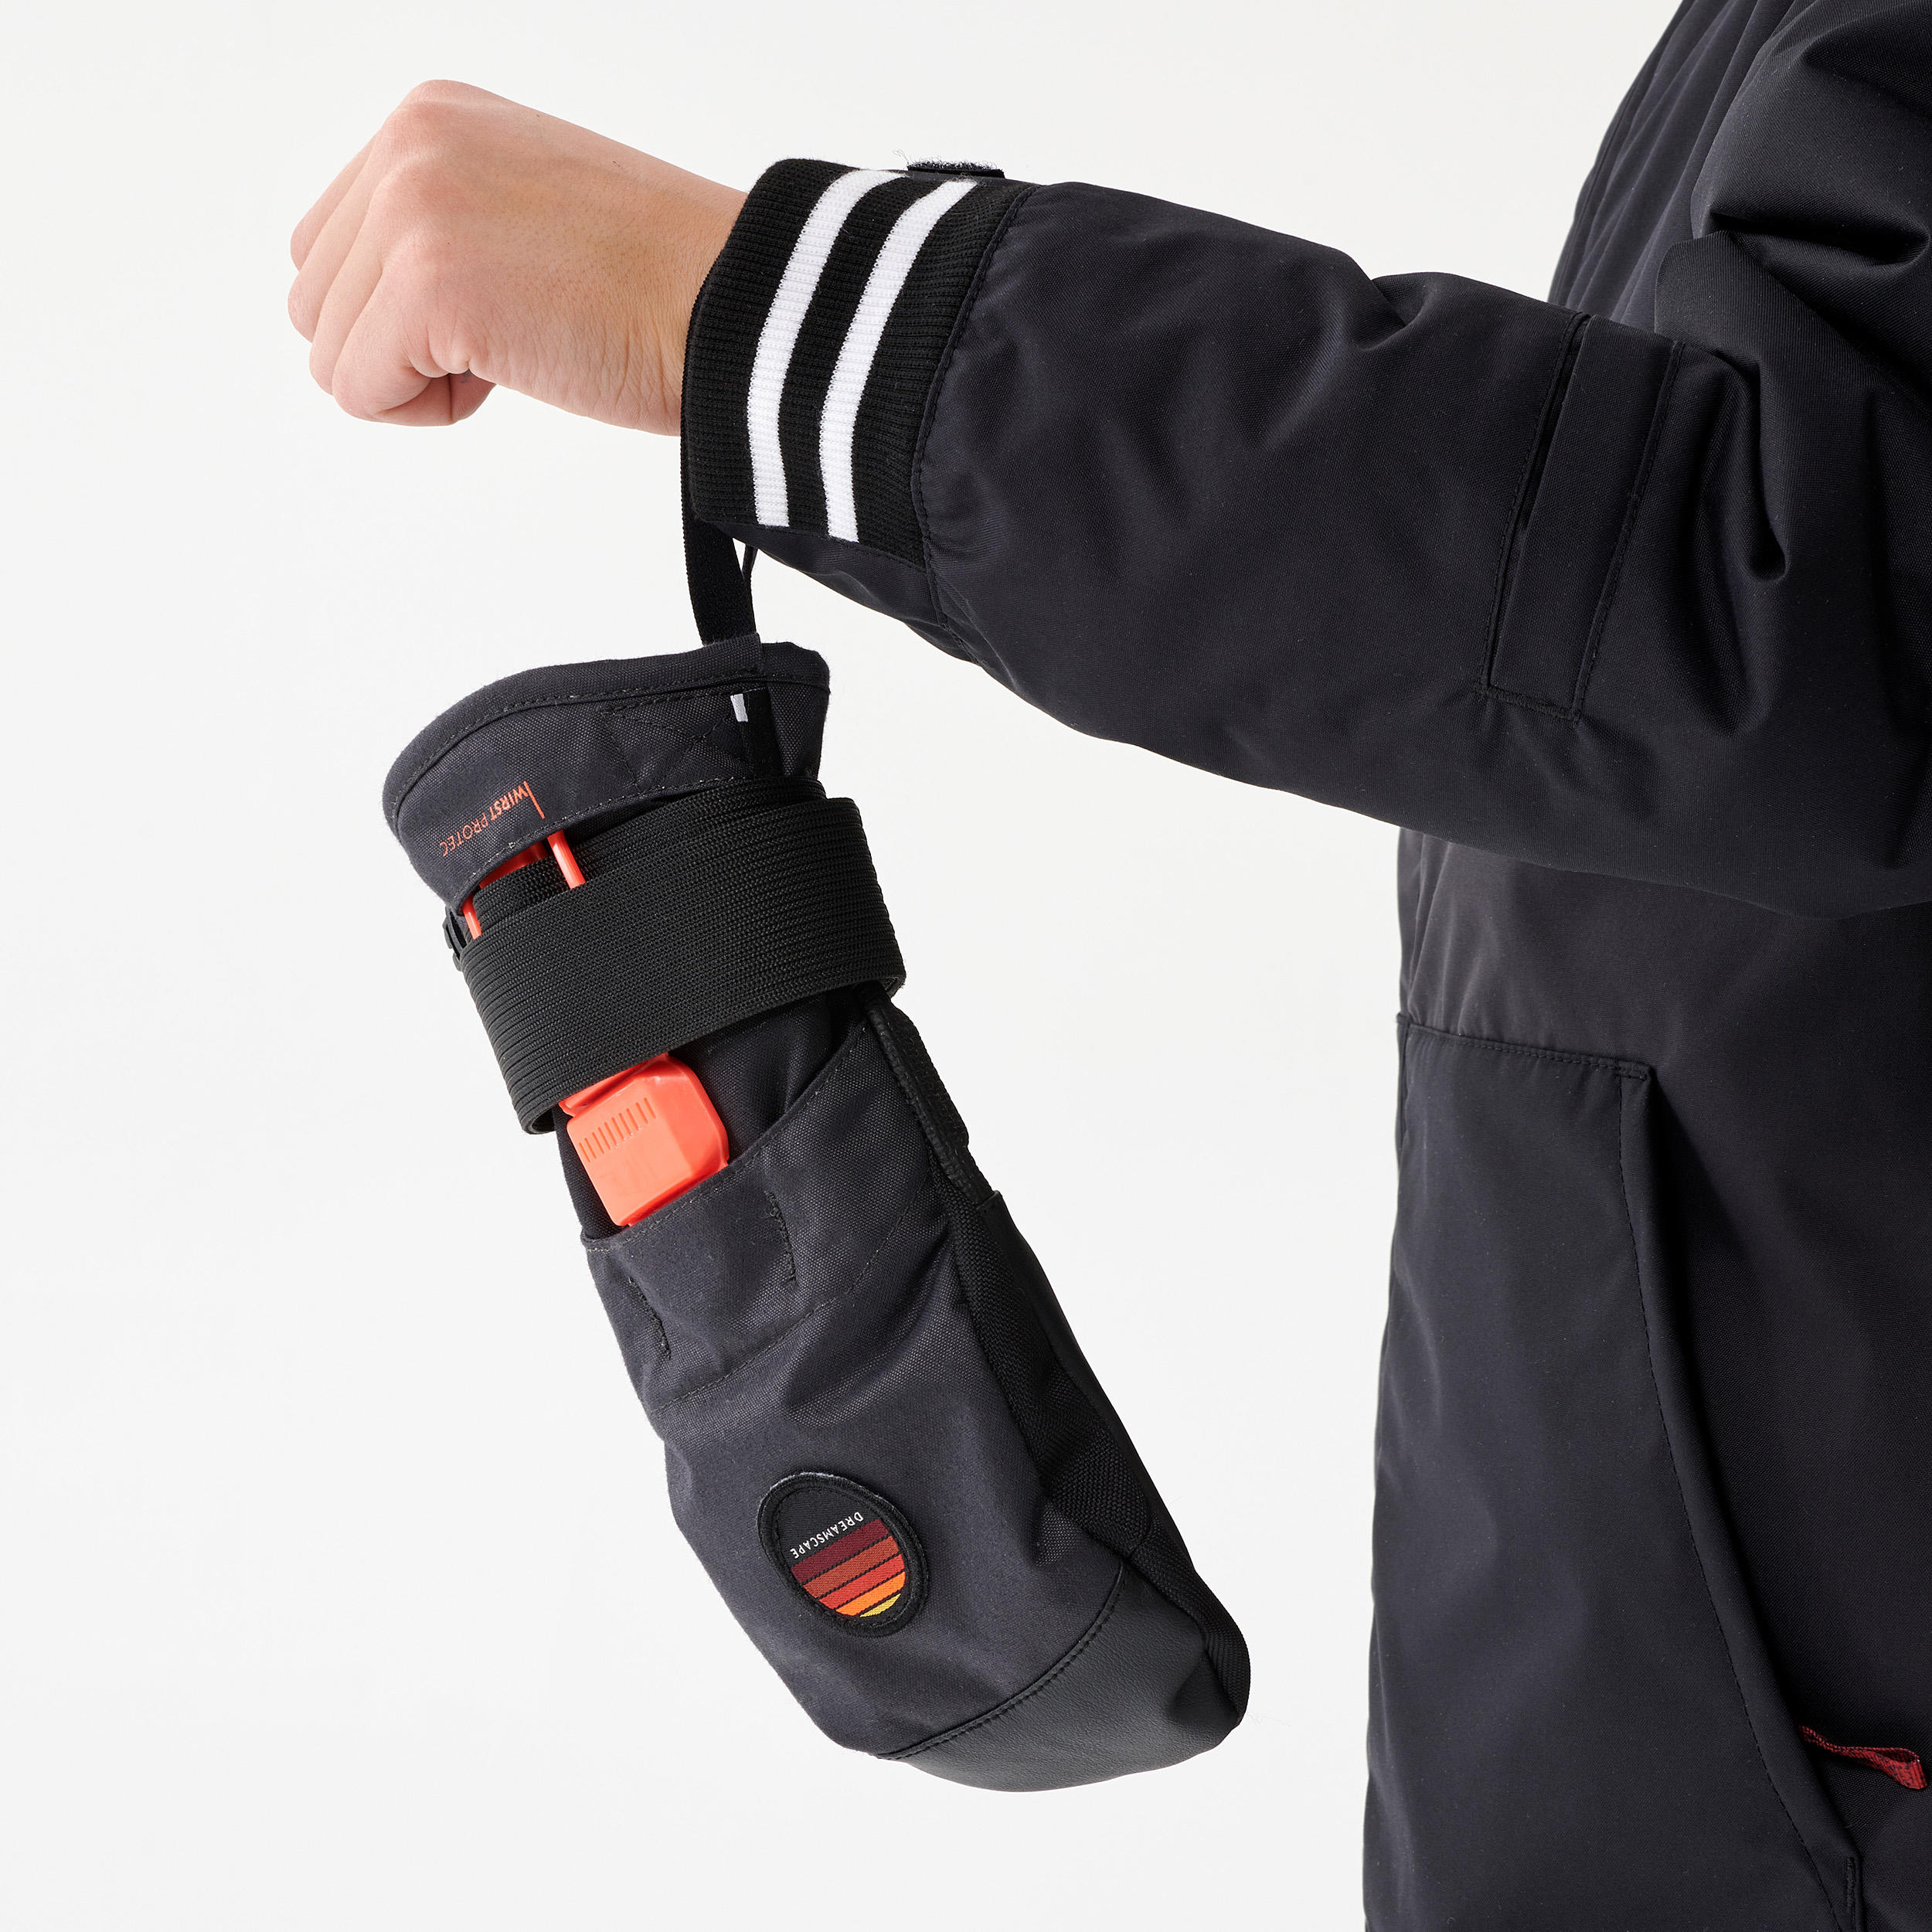 Children's snowboarding mittens - MI 500 JR Protect, black and orange 8/13